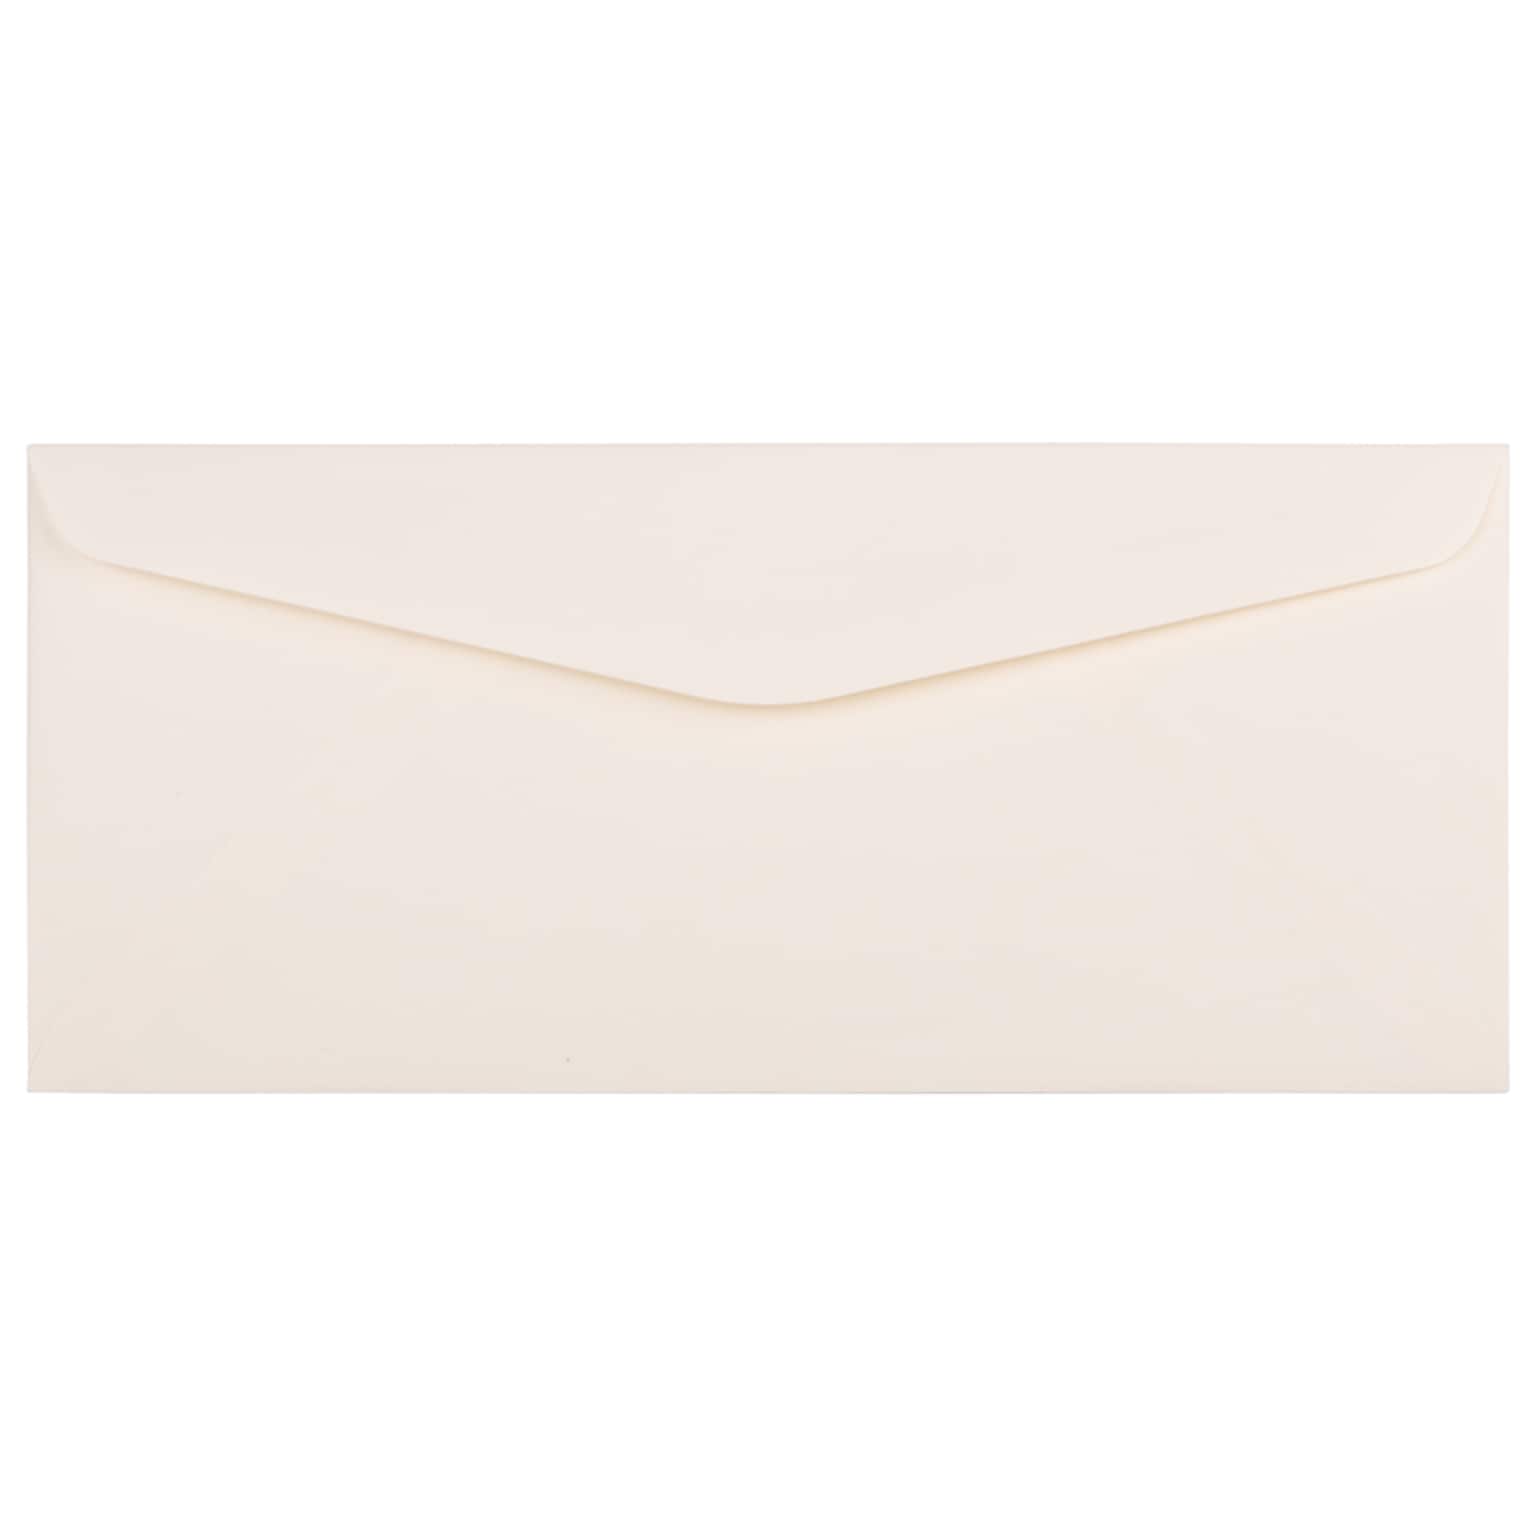 JAM Paper Strathmore Open End #10 Business Envelope, 4 1/8 x 9 1/2, Natural White, 500/Box (191170H)